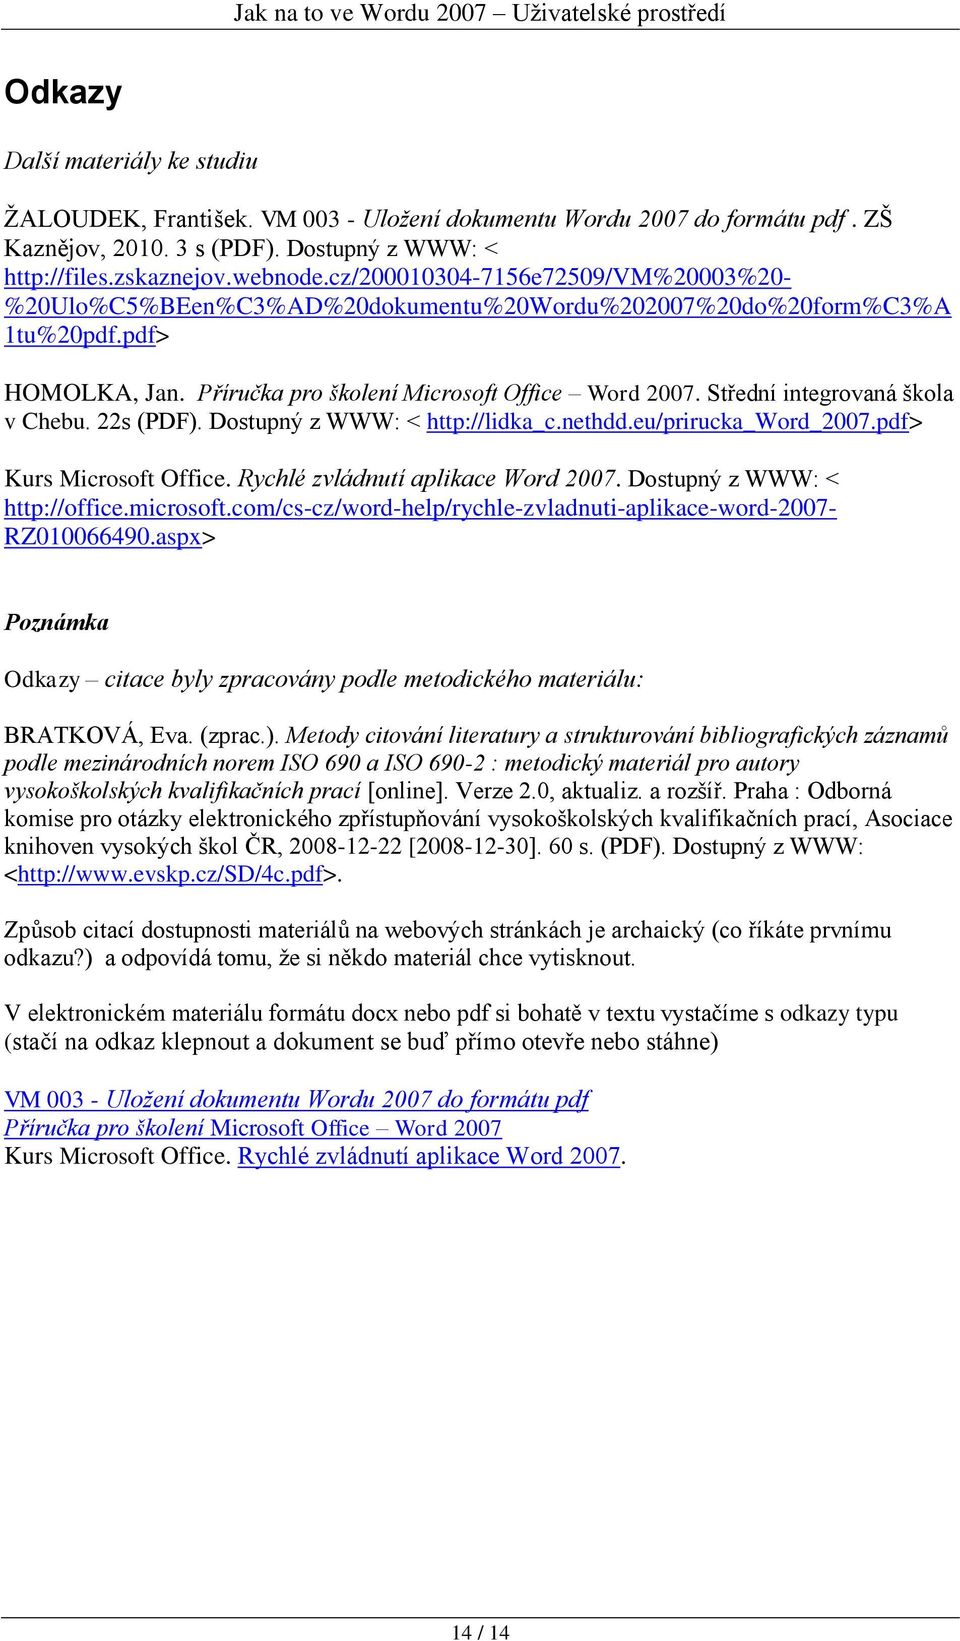 Střední integrovaná škola v Chebu. 22s (PDF). Dostupný z WWW: < http://lidka_c.nethdd.eu/prirucka_word_2007.pdf> Kurs Microsoft Office. Rychlé zvládnutí aplikace Word 2007.